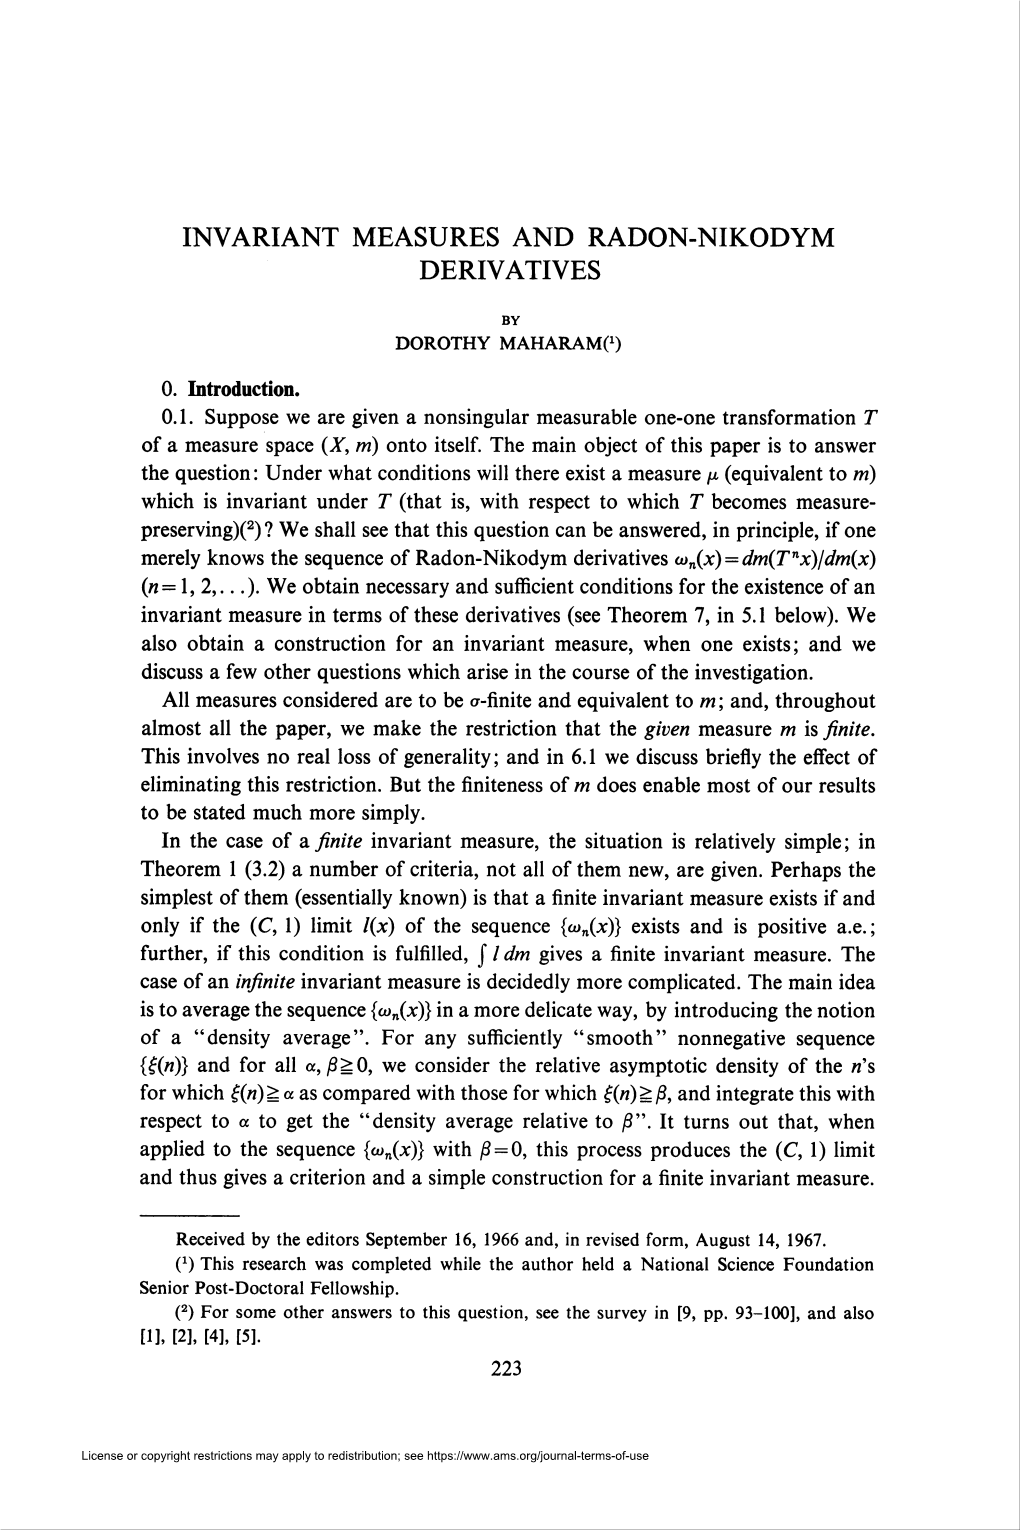 Invariant Measures and Radon-Nikodym Derivatives